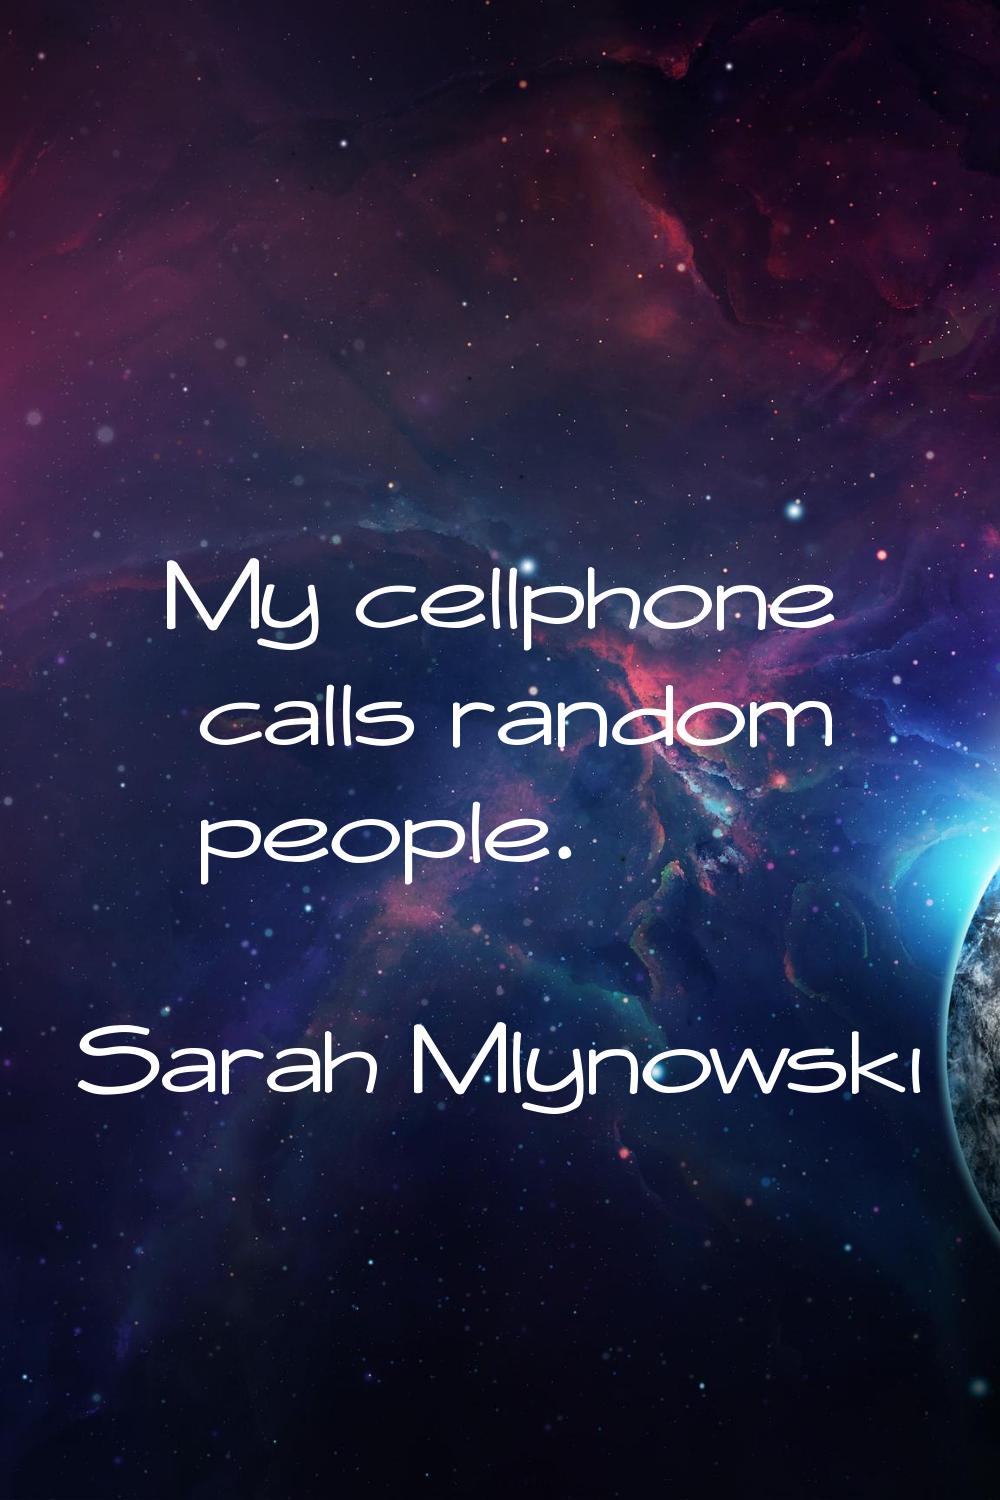 My cellphone calls random people.